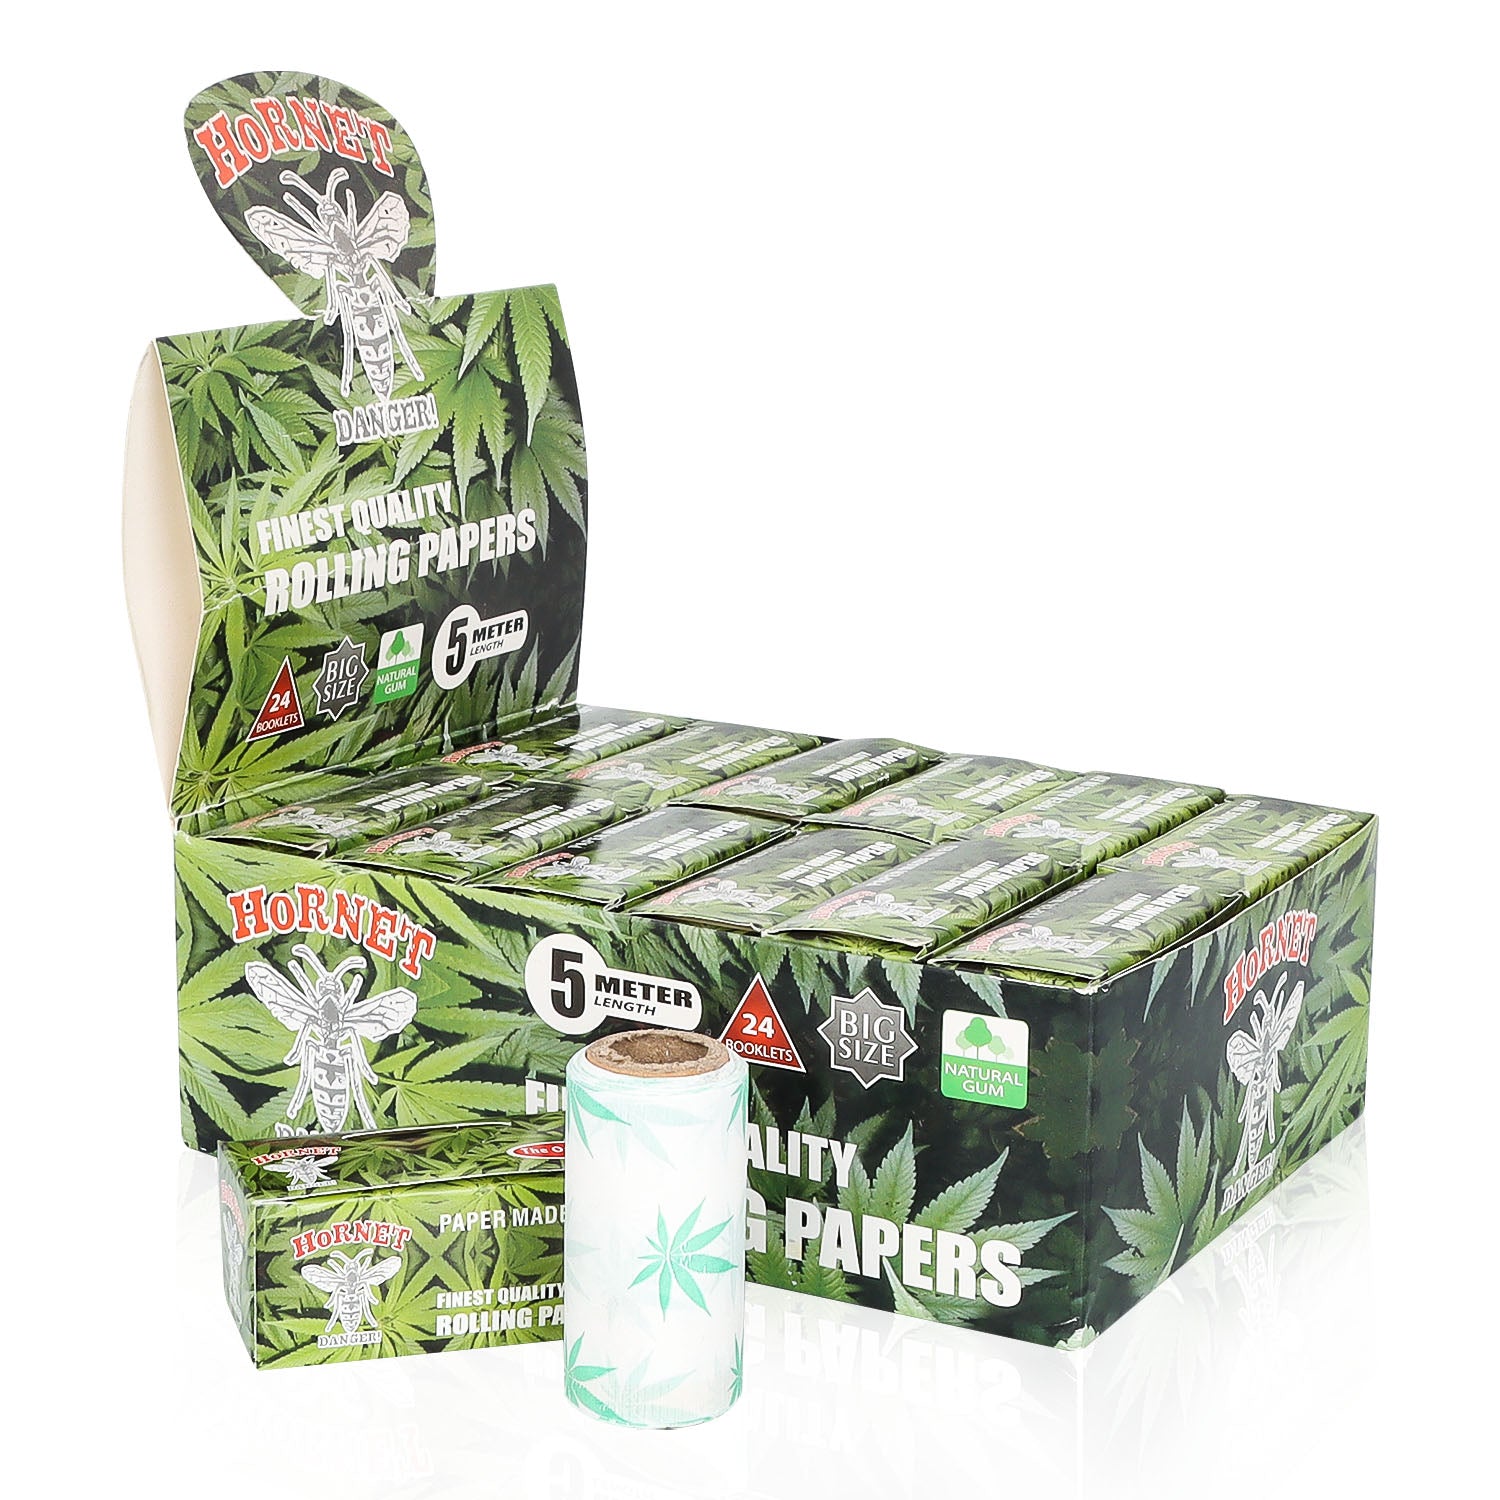 HORNET Leaf Style Rolling Paper Rolls, 5 m Free Rolling Papers, Organic Rolling Paper Rolls, 24 PCS / Box